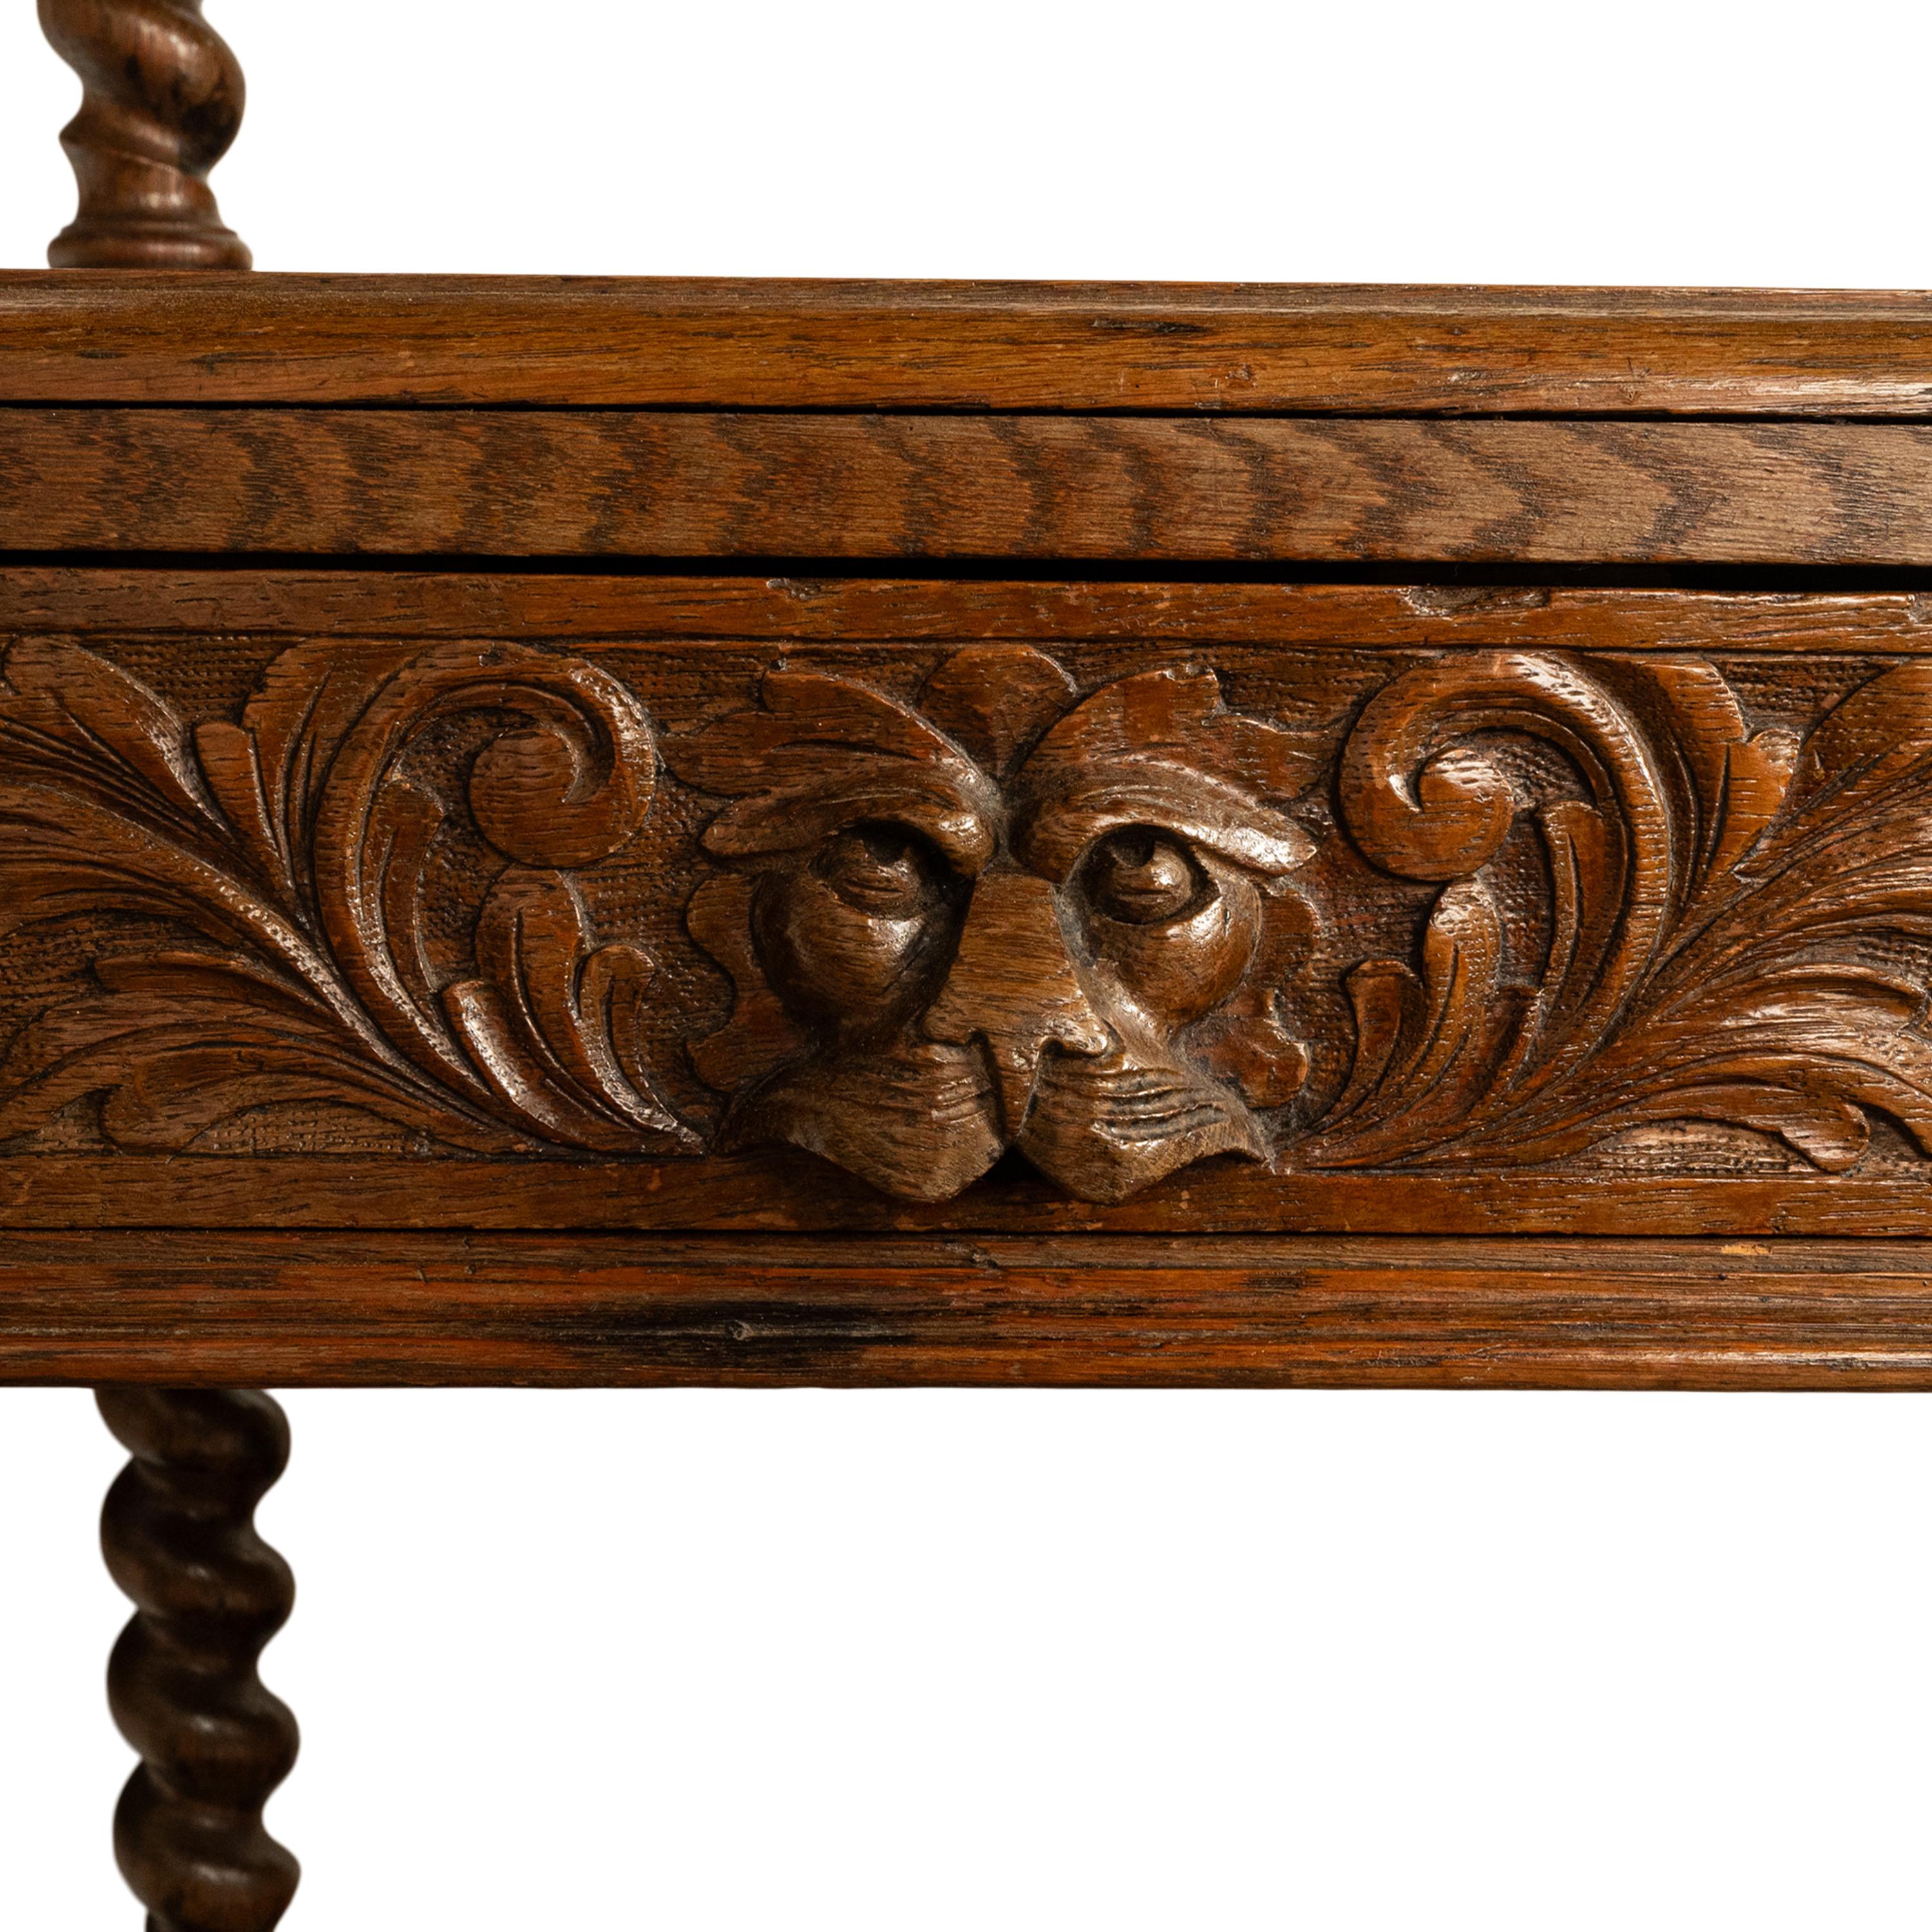 Antique French Renaissance Revival Carved Oak Barley Twist Server Buffet 1870 For Sale 11